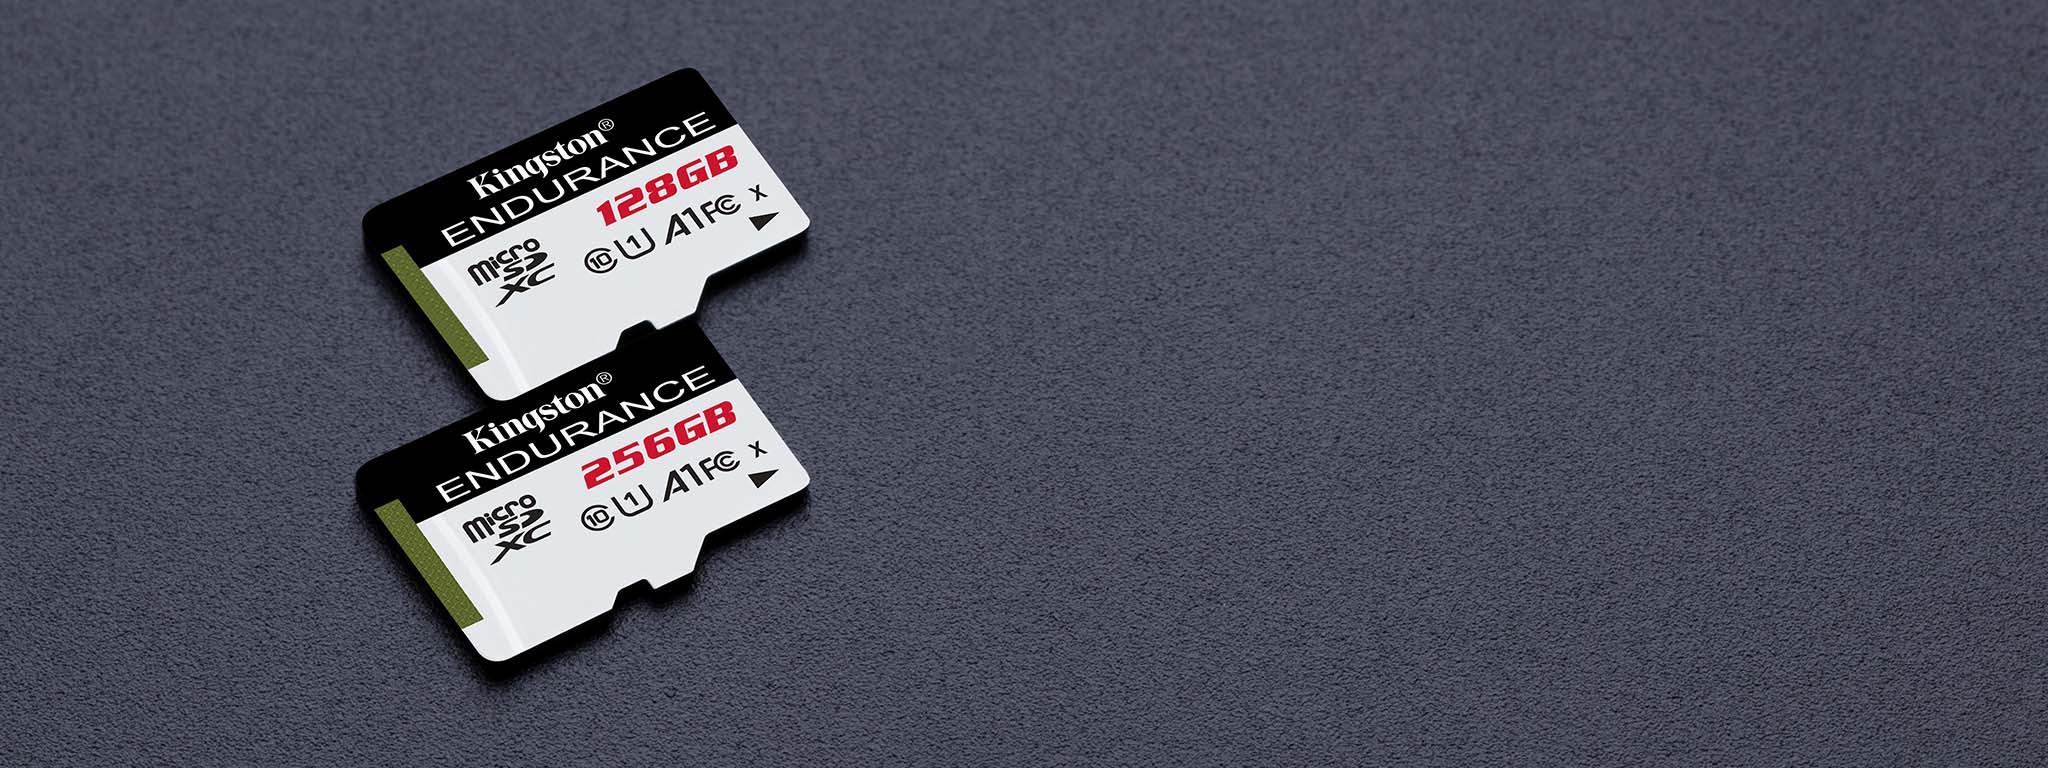 Sepasang kartu microSD High-Endurance dengan kapasitas 128GB dan 64GB, diletakkan pada permukaan hitam